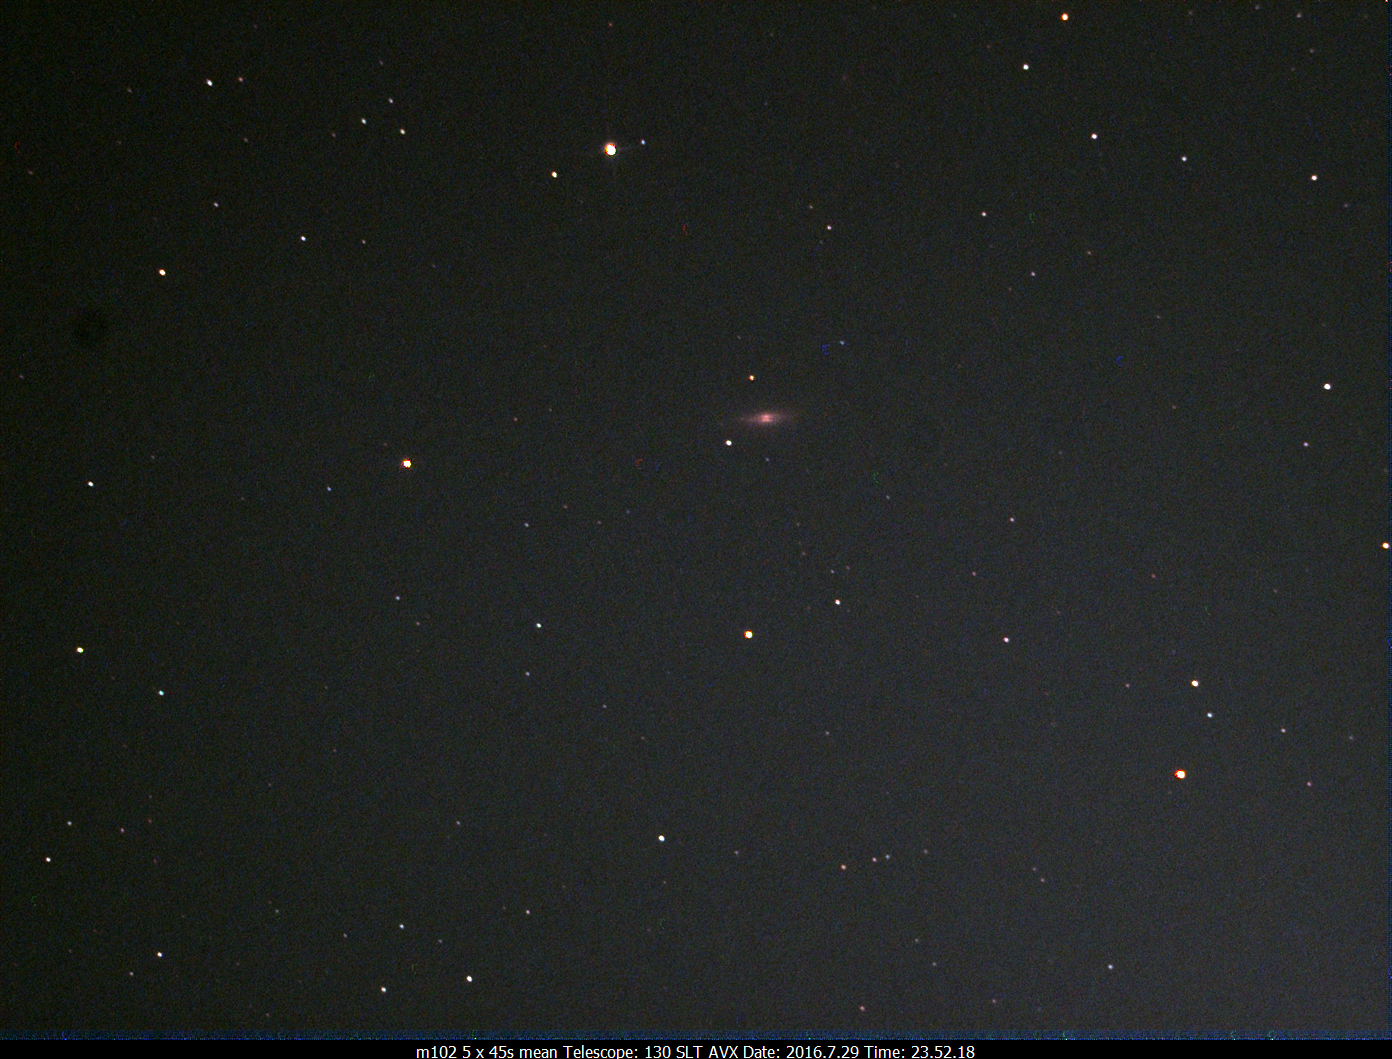 m102 5x45s Celestron 130 SLT on an AVX mount  Ultrastar-C w/Astronomik CLS CCD filter